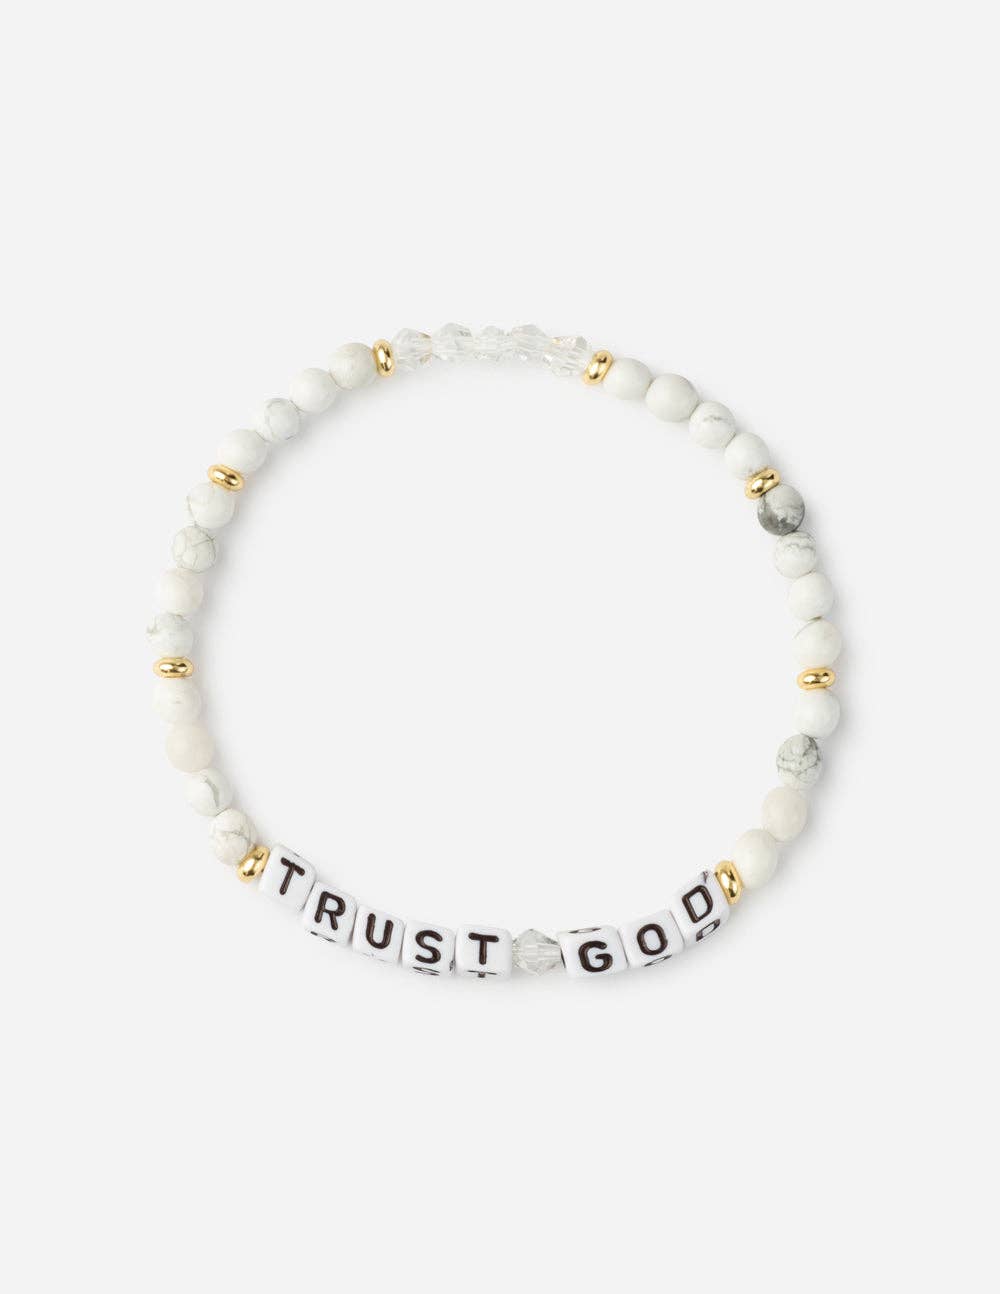 Trust God Letter Bracelet: Large